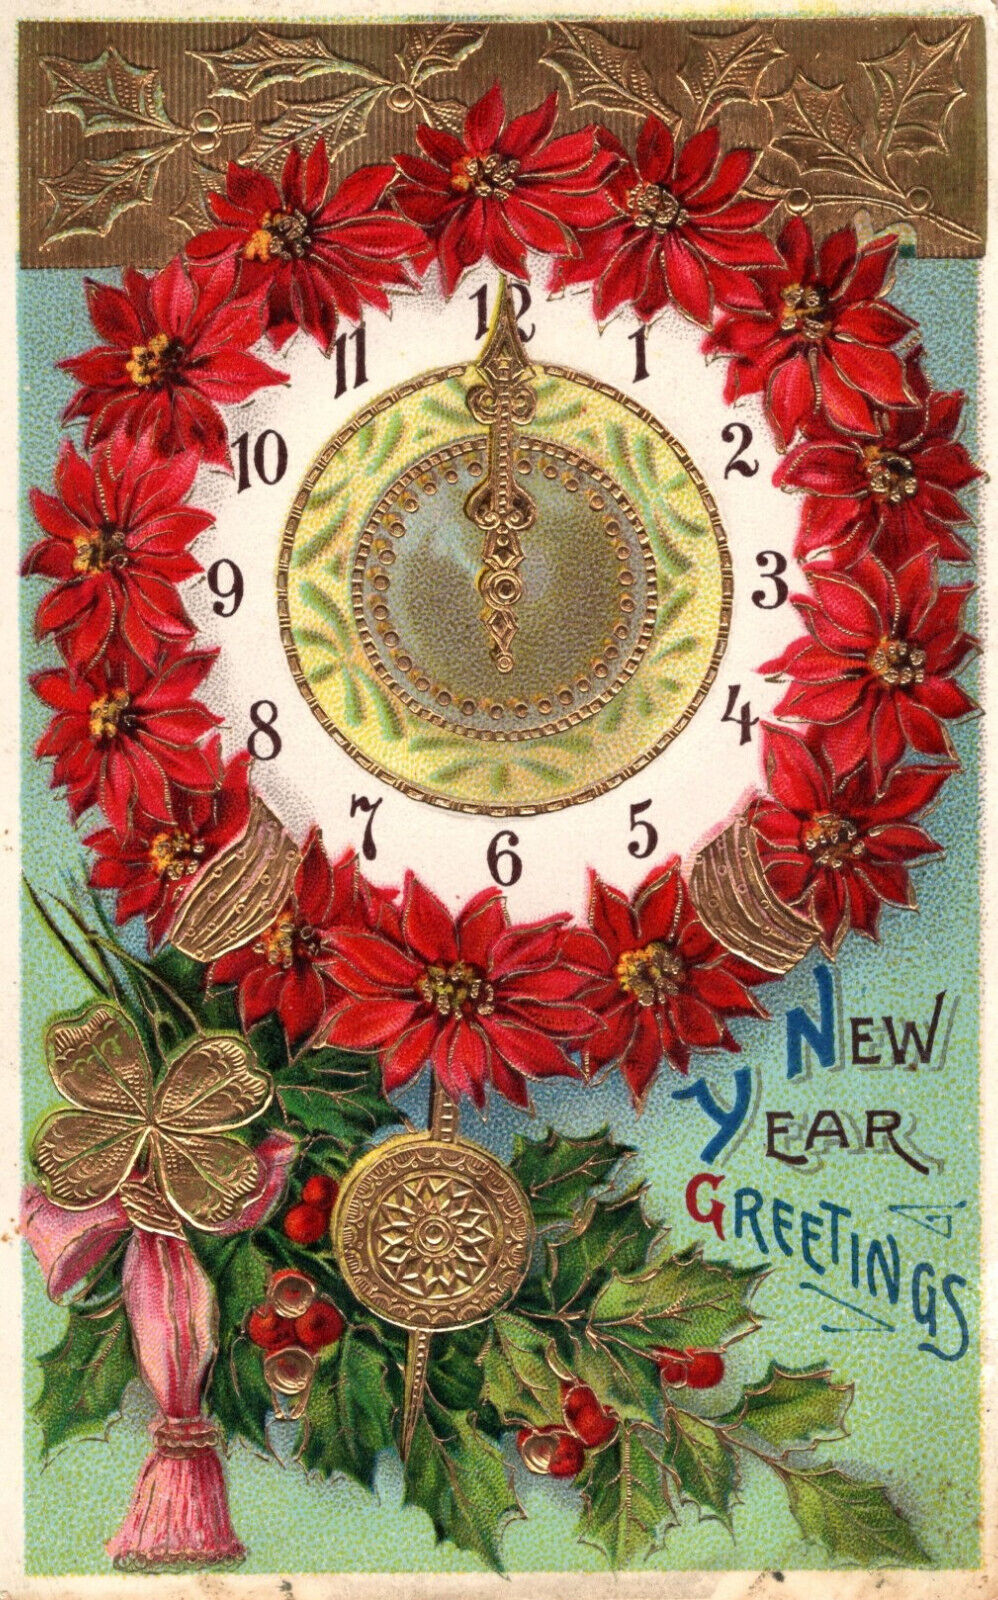 Vintage New Year Greetings Poinsettias Round Clock Postcard